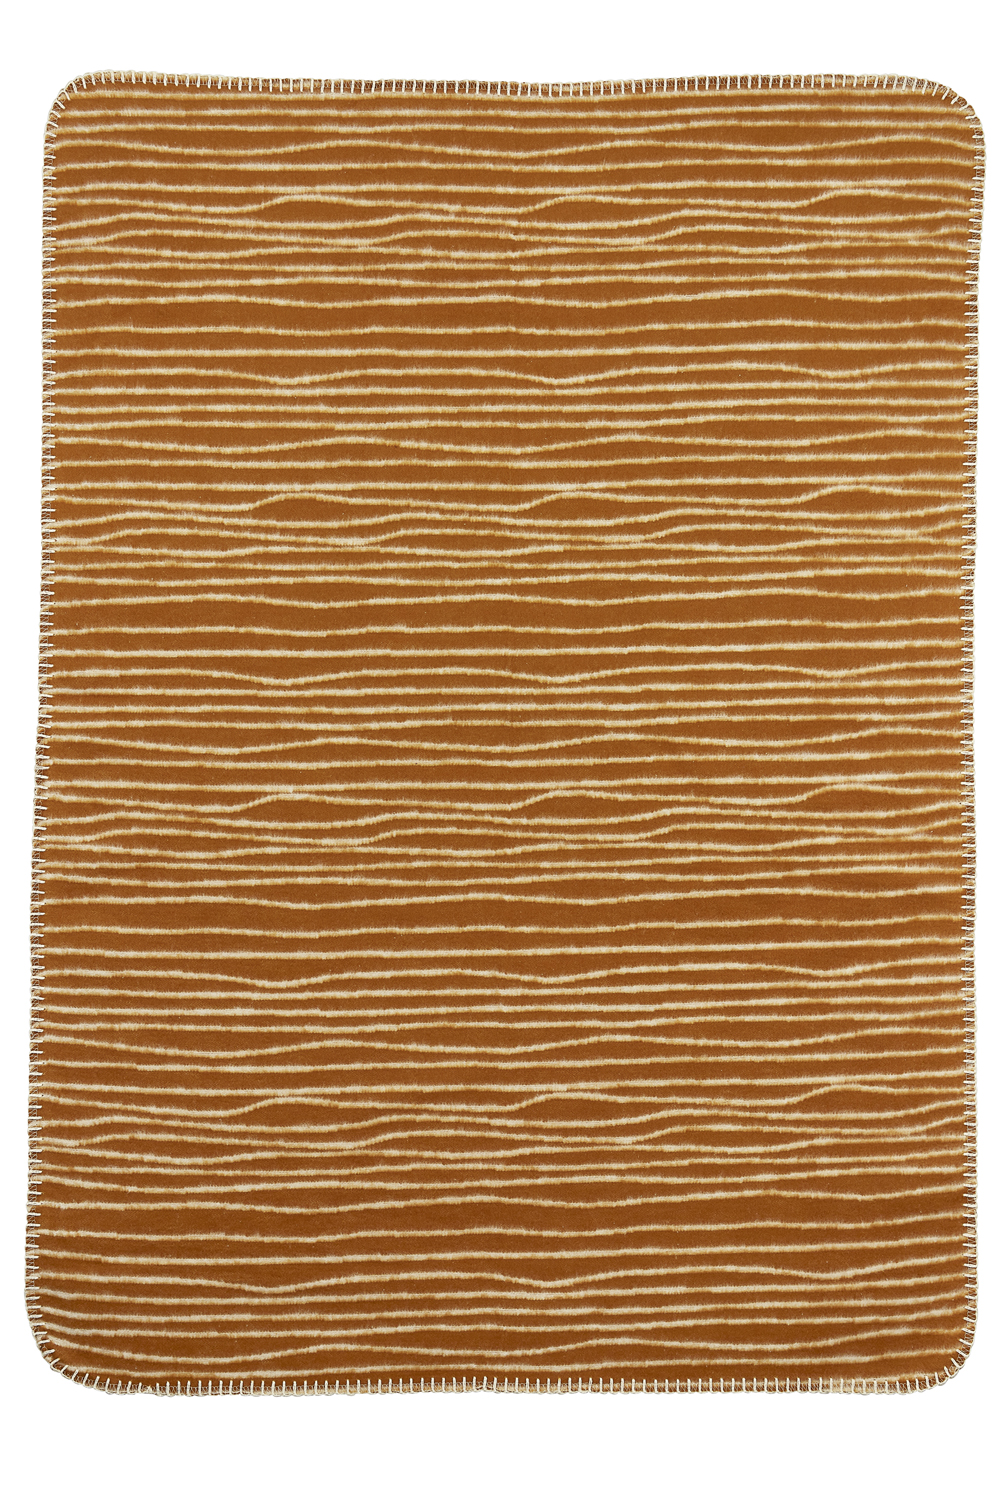 Wiegdeken Stripe - camel/offwhite - 75x100cm